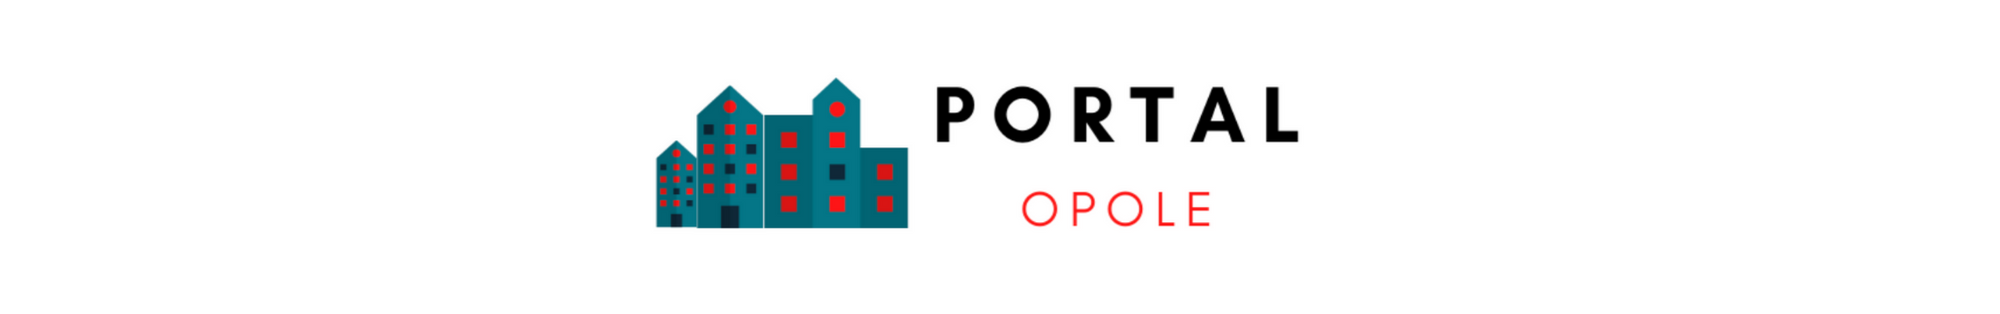 PortalOpole – portal lokalny